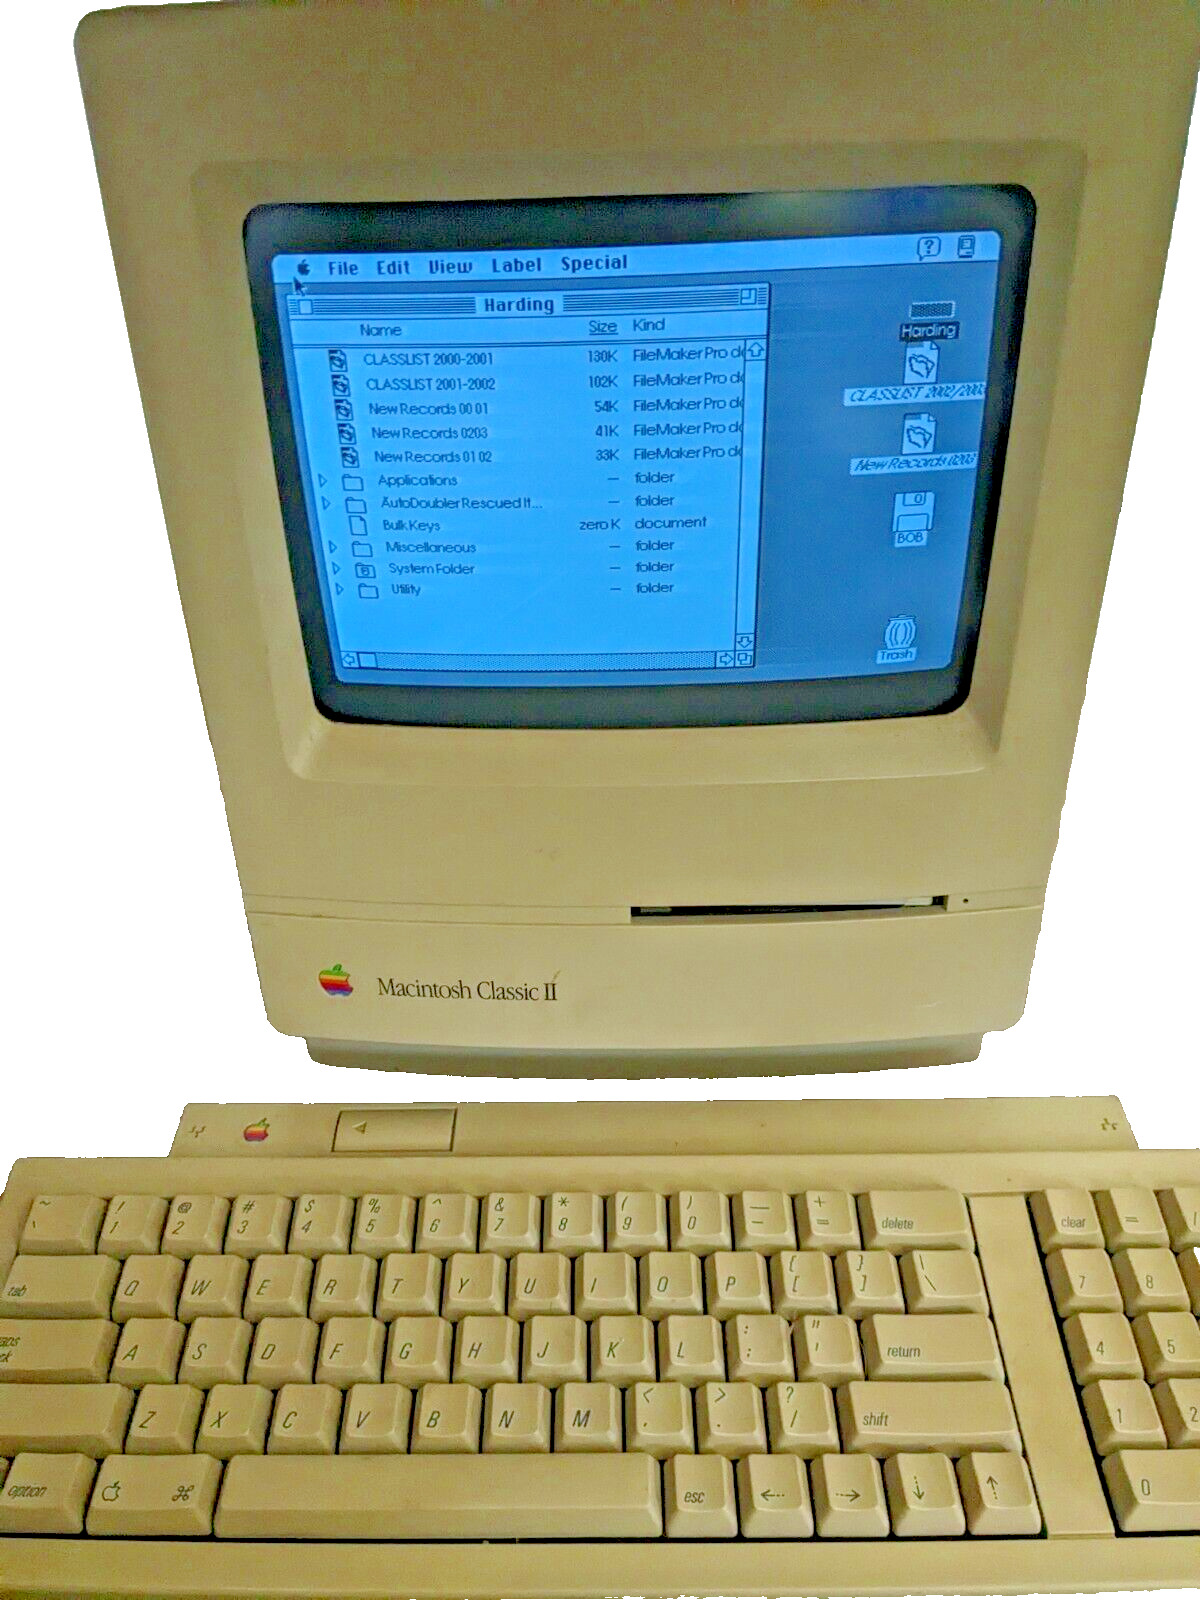 Apple Macintosh Classic II M4150 Home Computer with Keyboard 1992